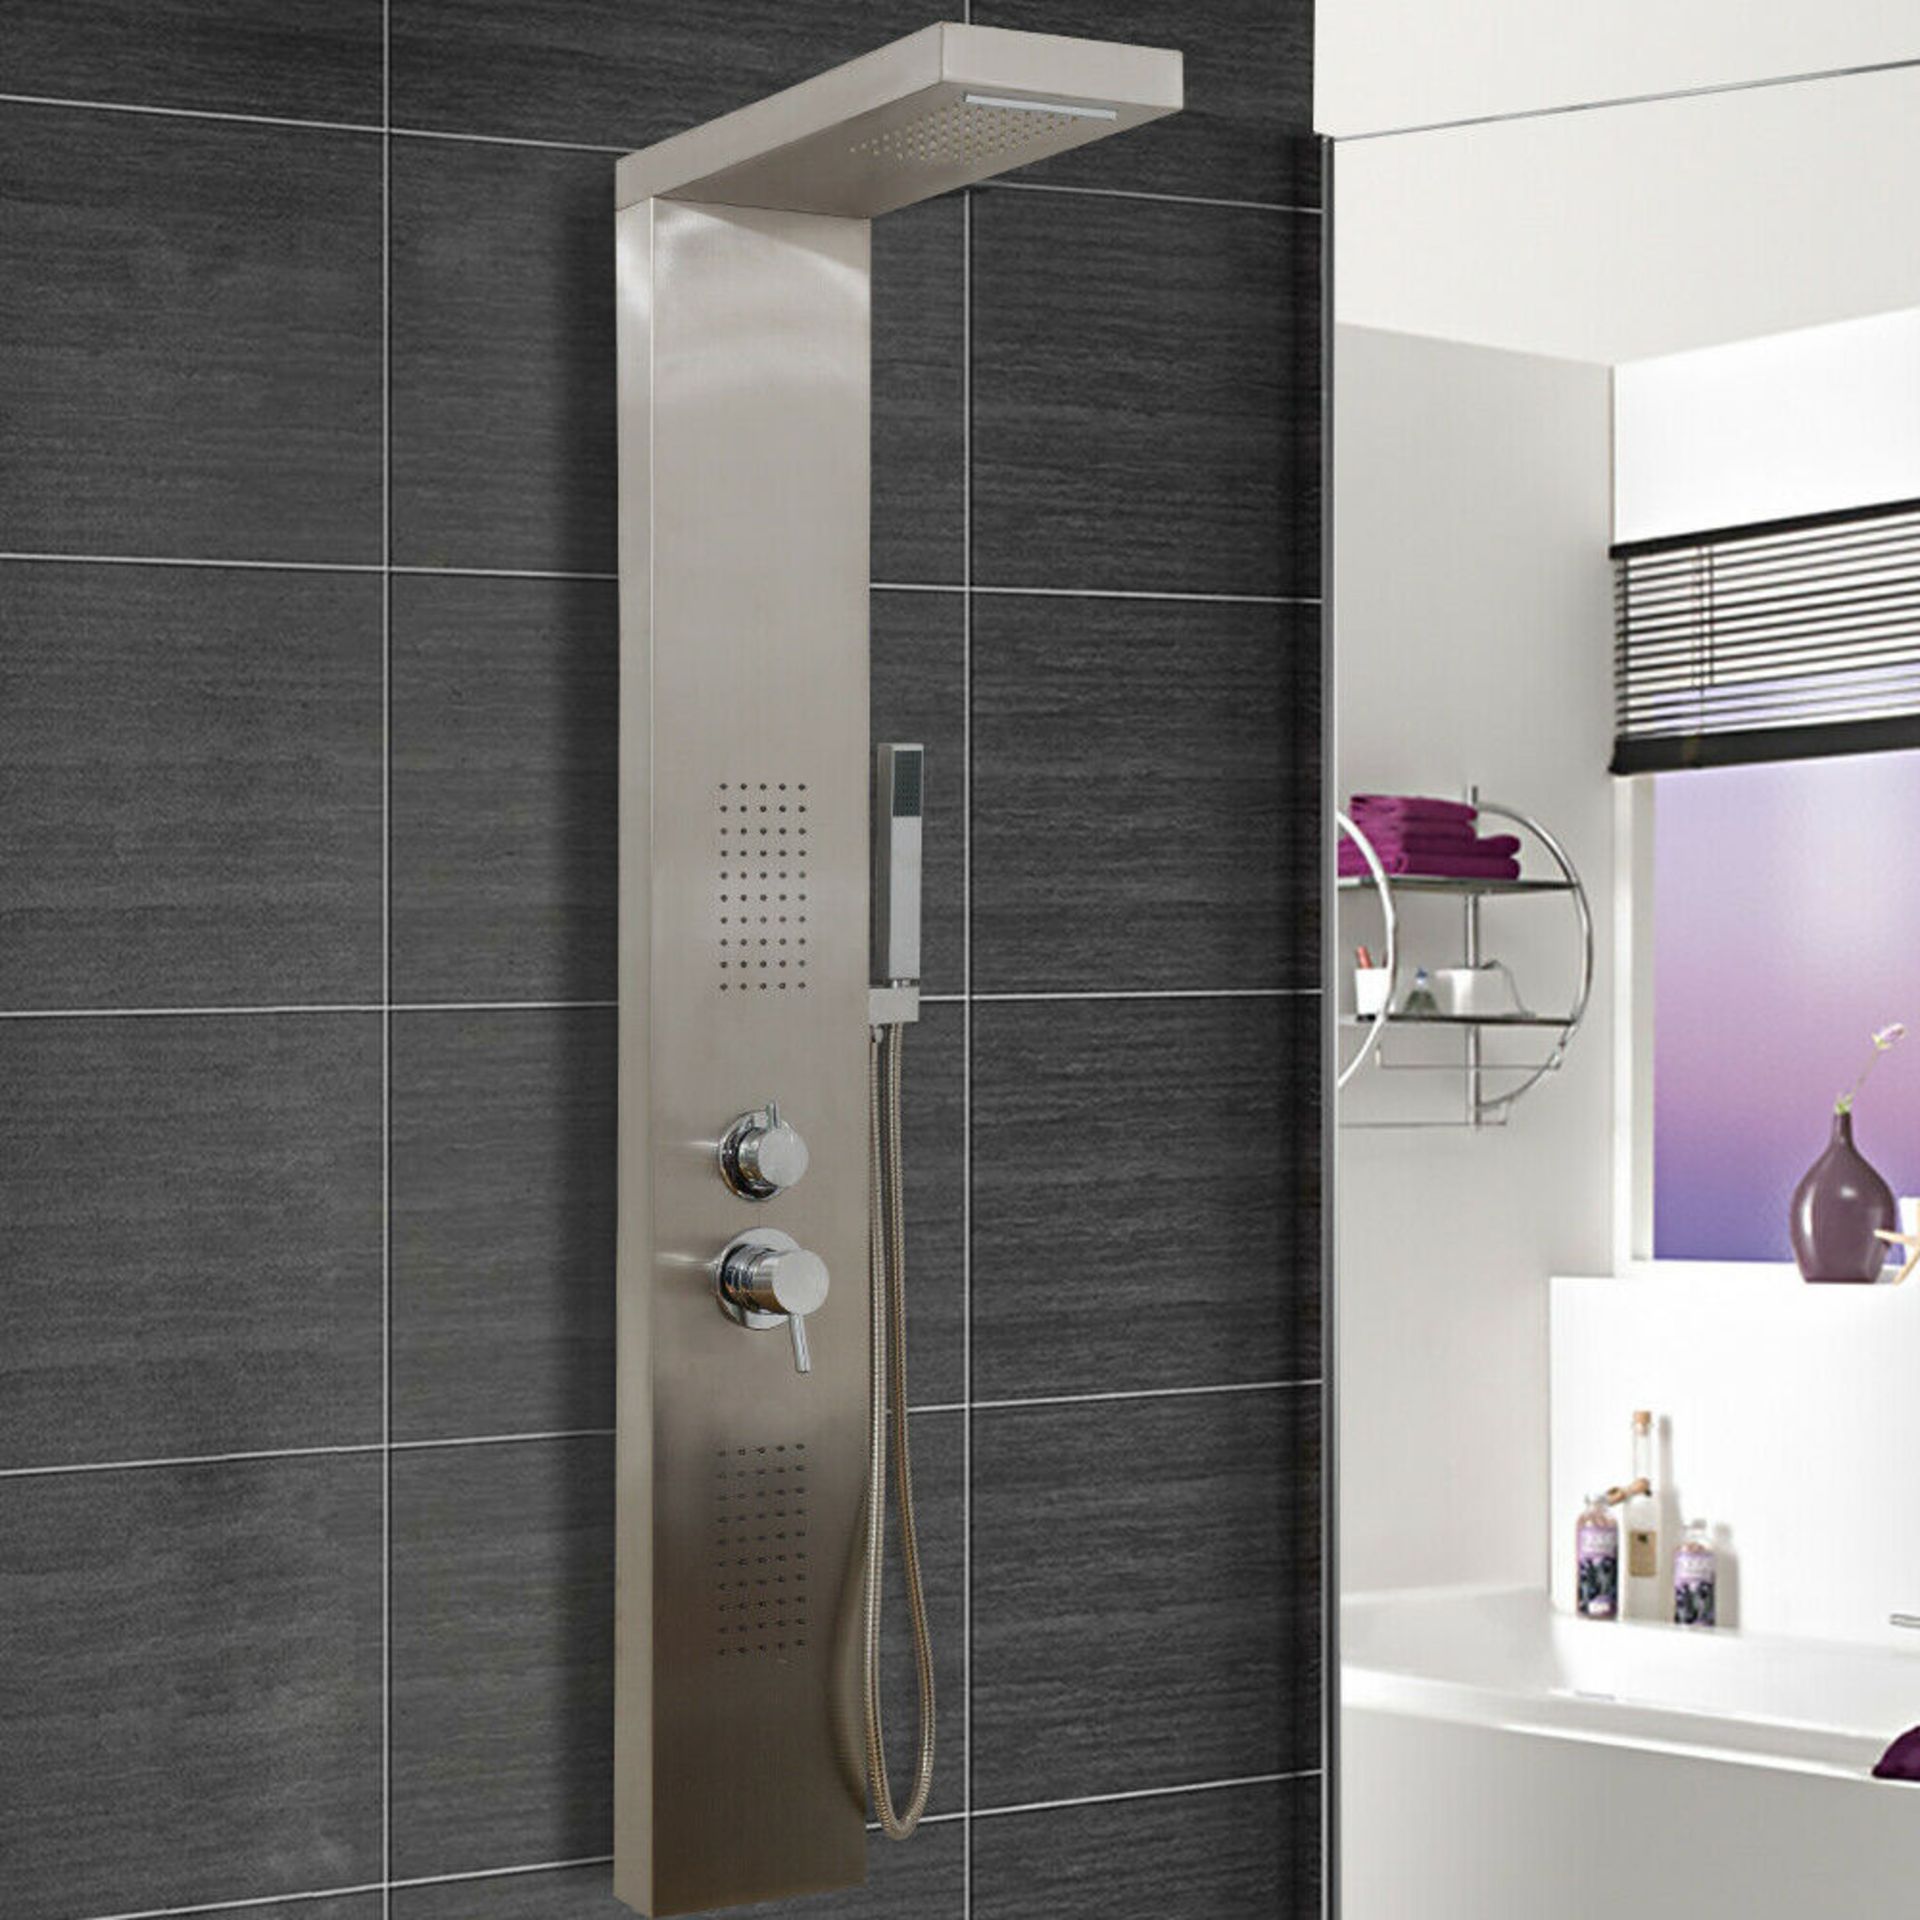 (UR122) Chrome Modern Bathroom Shower Column Tower Panel System With Hand held Massage Jets. ... - Image 2 of 2